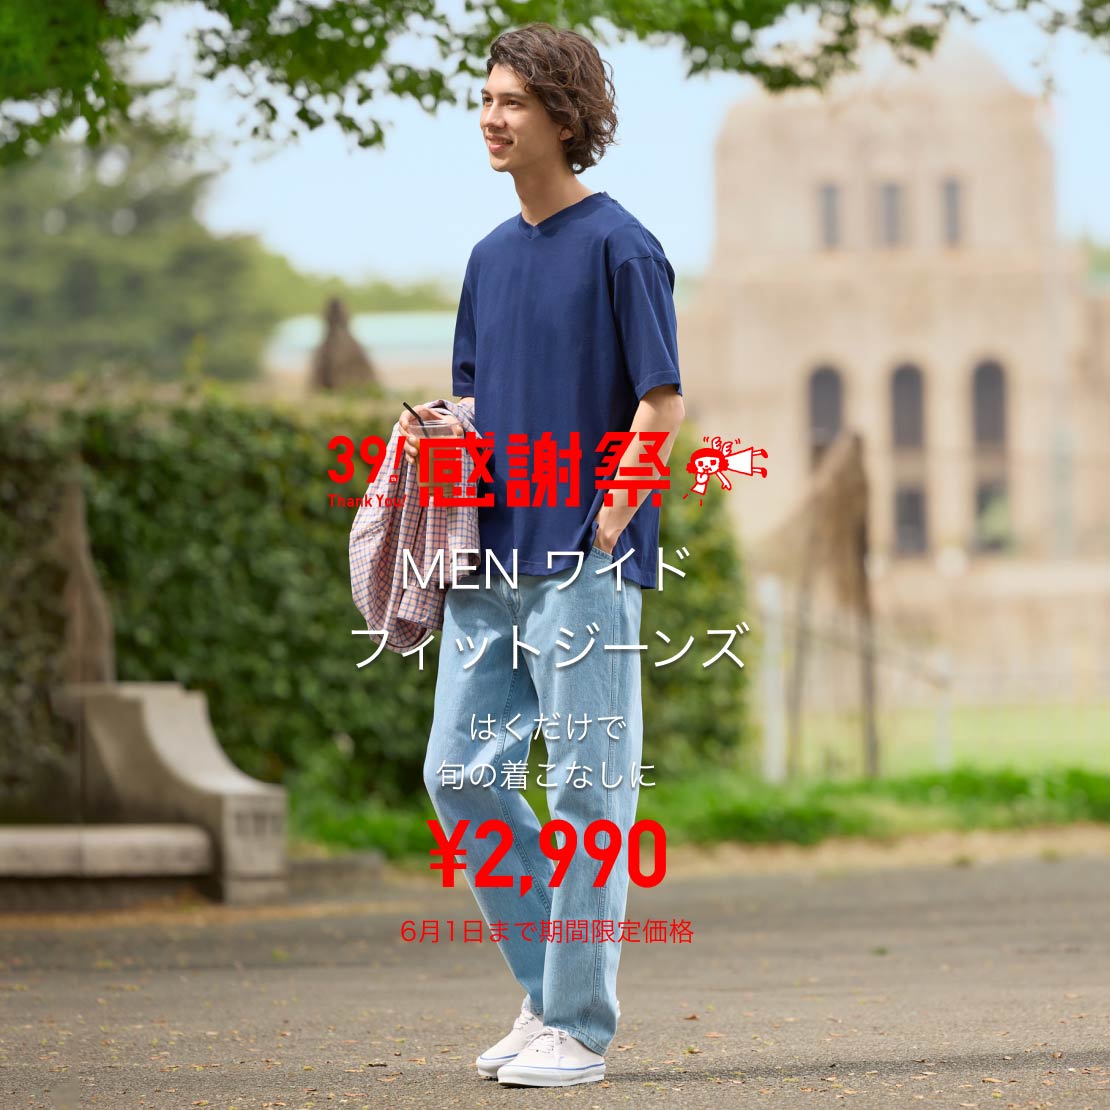 MEN ワイドフィットジーンズ ¥2,990 6月1日まで期間限定価格